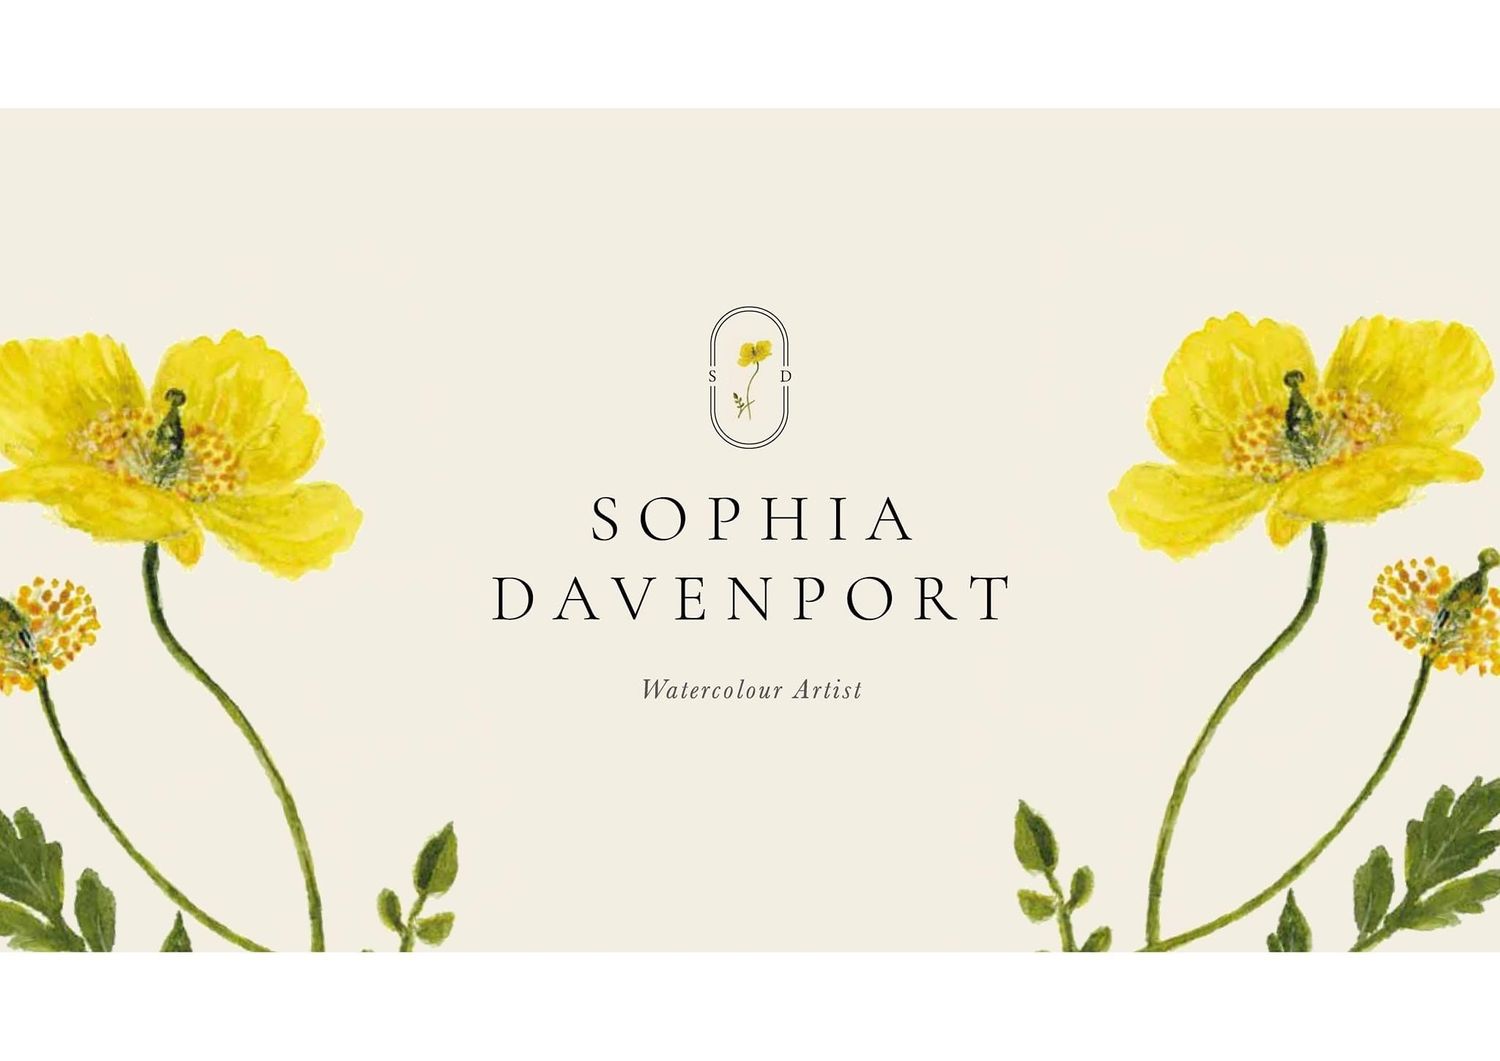 Sophia Davenport Ltd